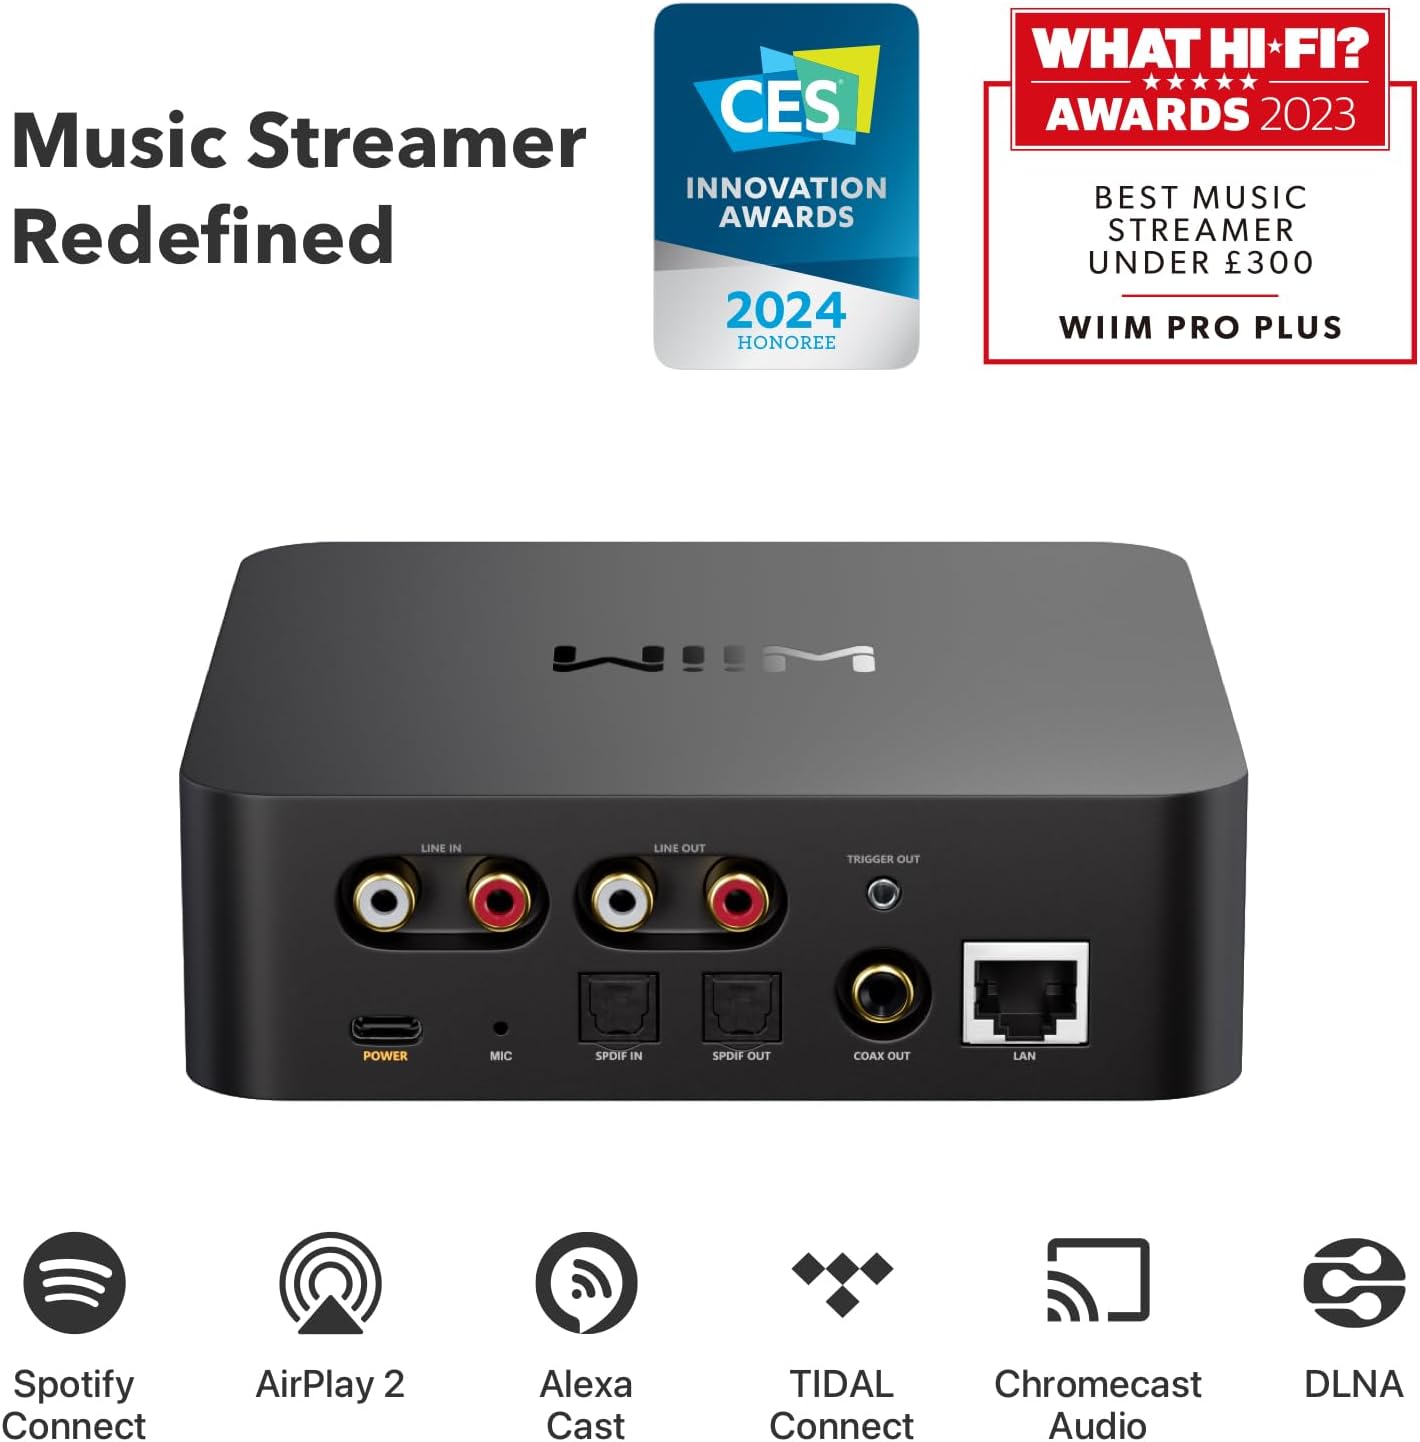 Wiim Pro Plus Music Streamer